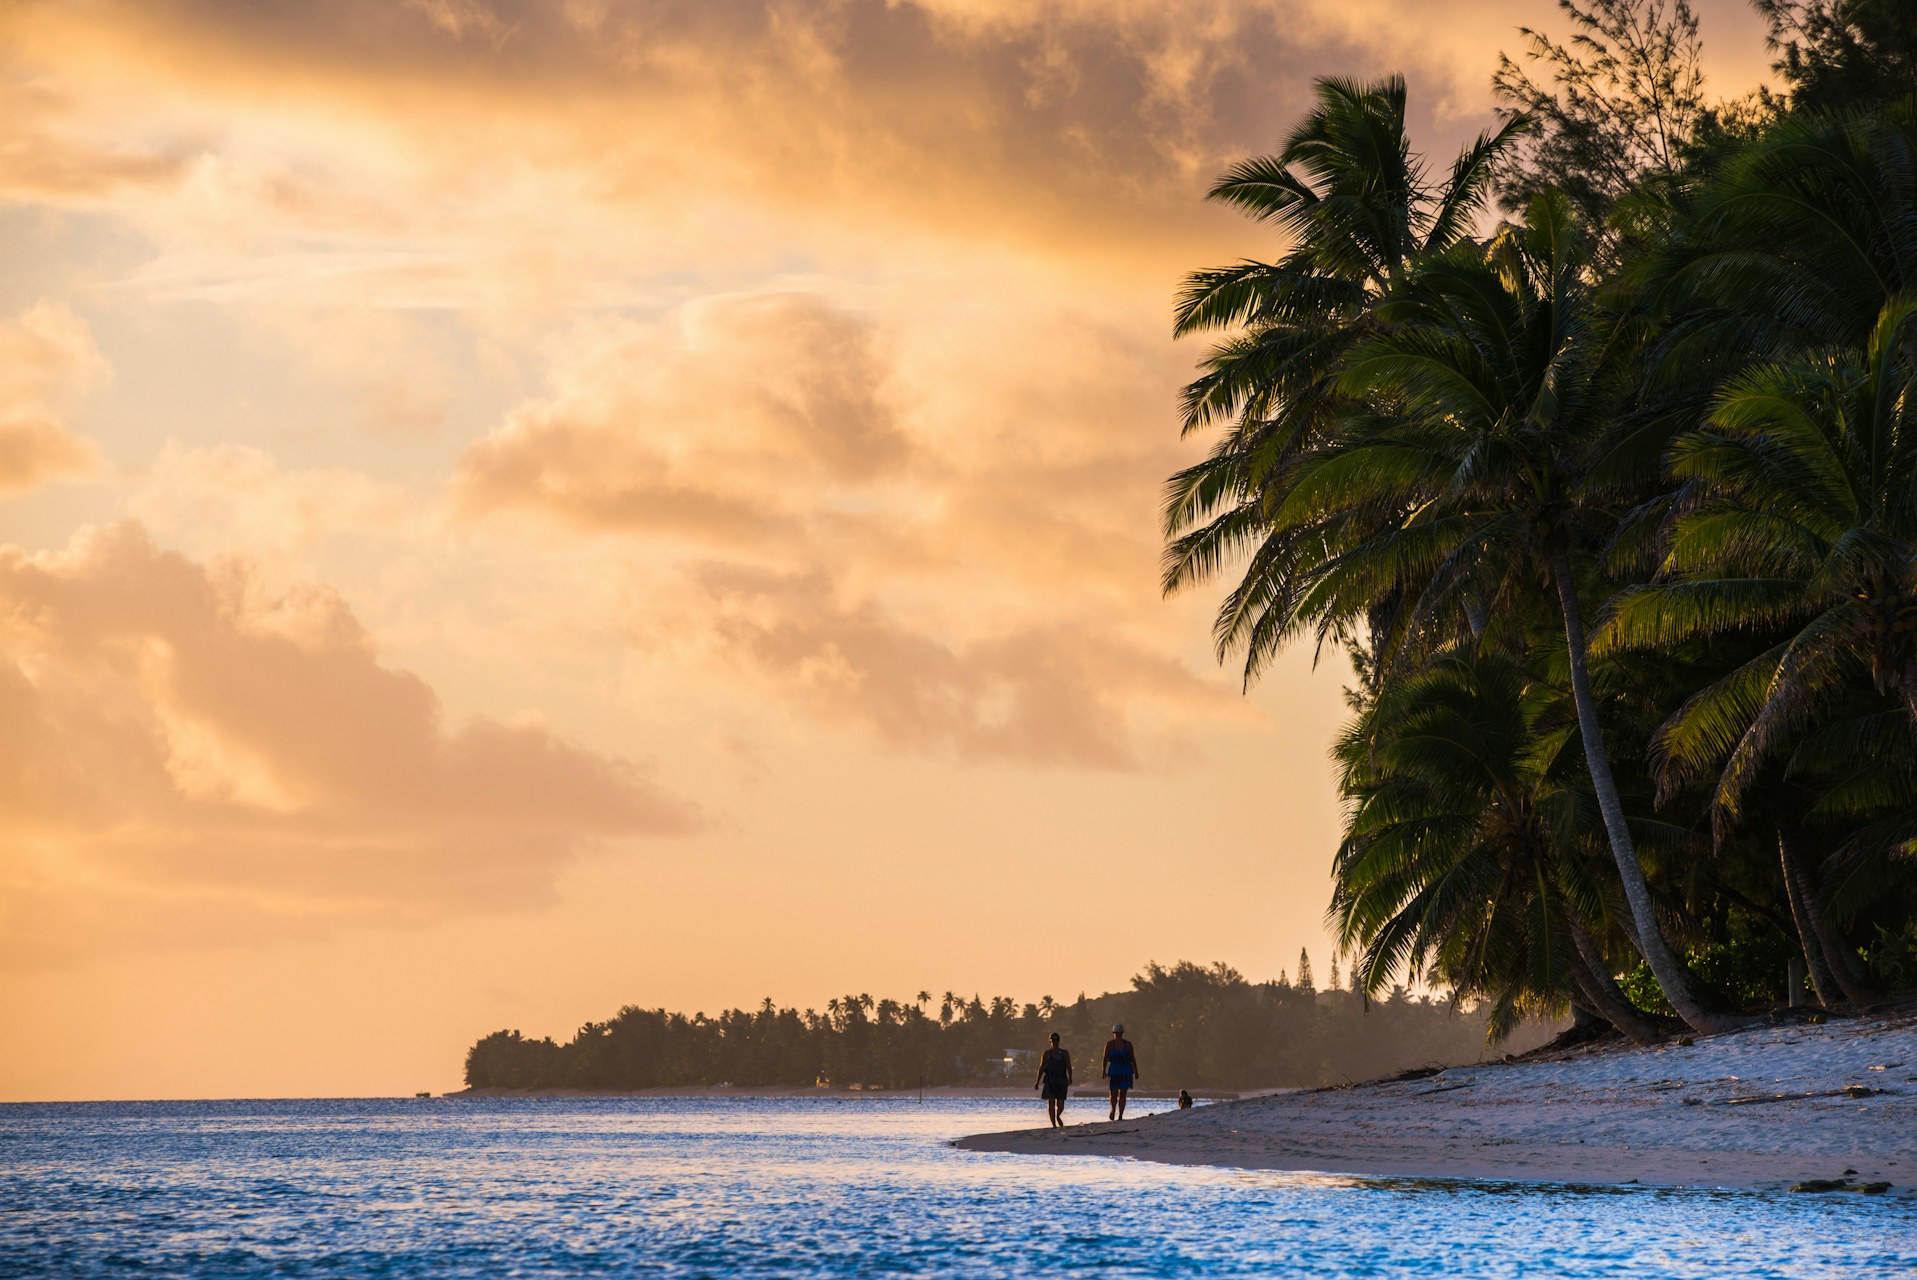 Cook Islands Landscape Travel Photography Walking along a tropical beach at sunset Rarotonga Cook Islands